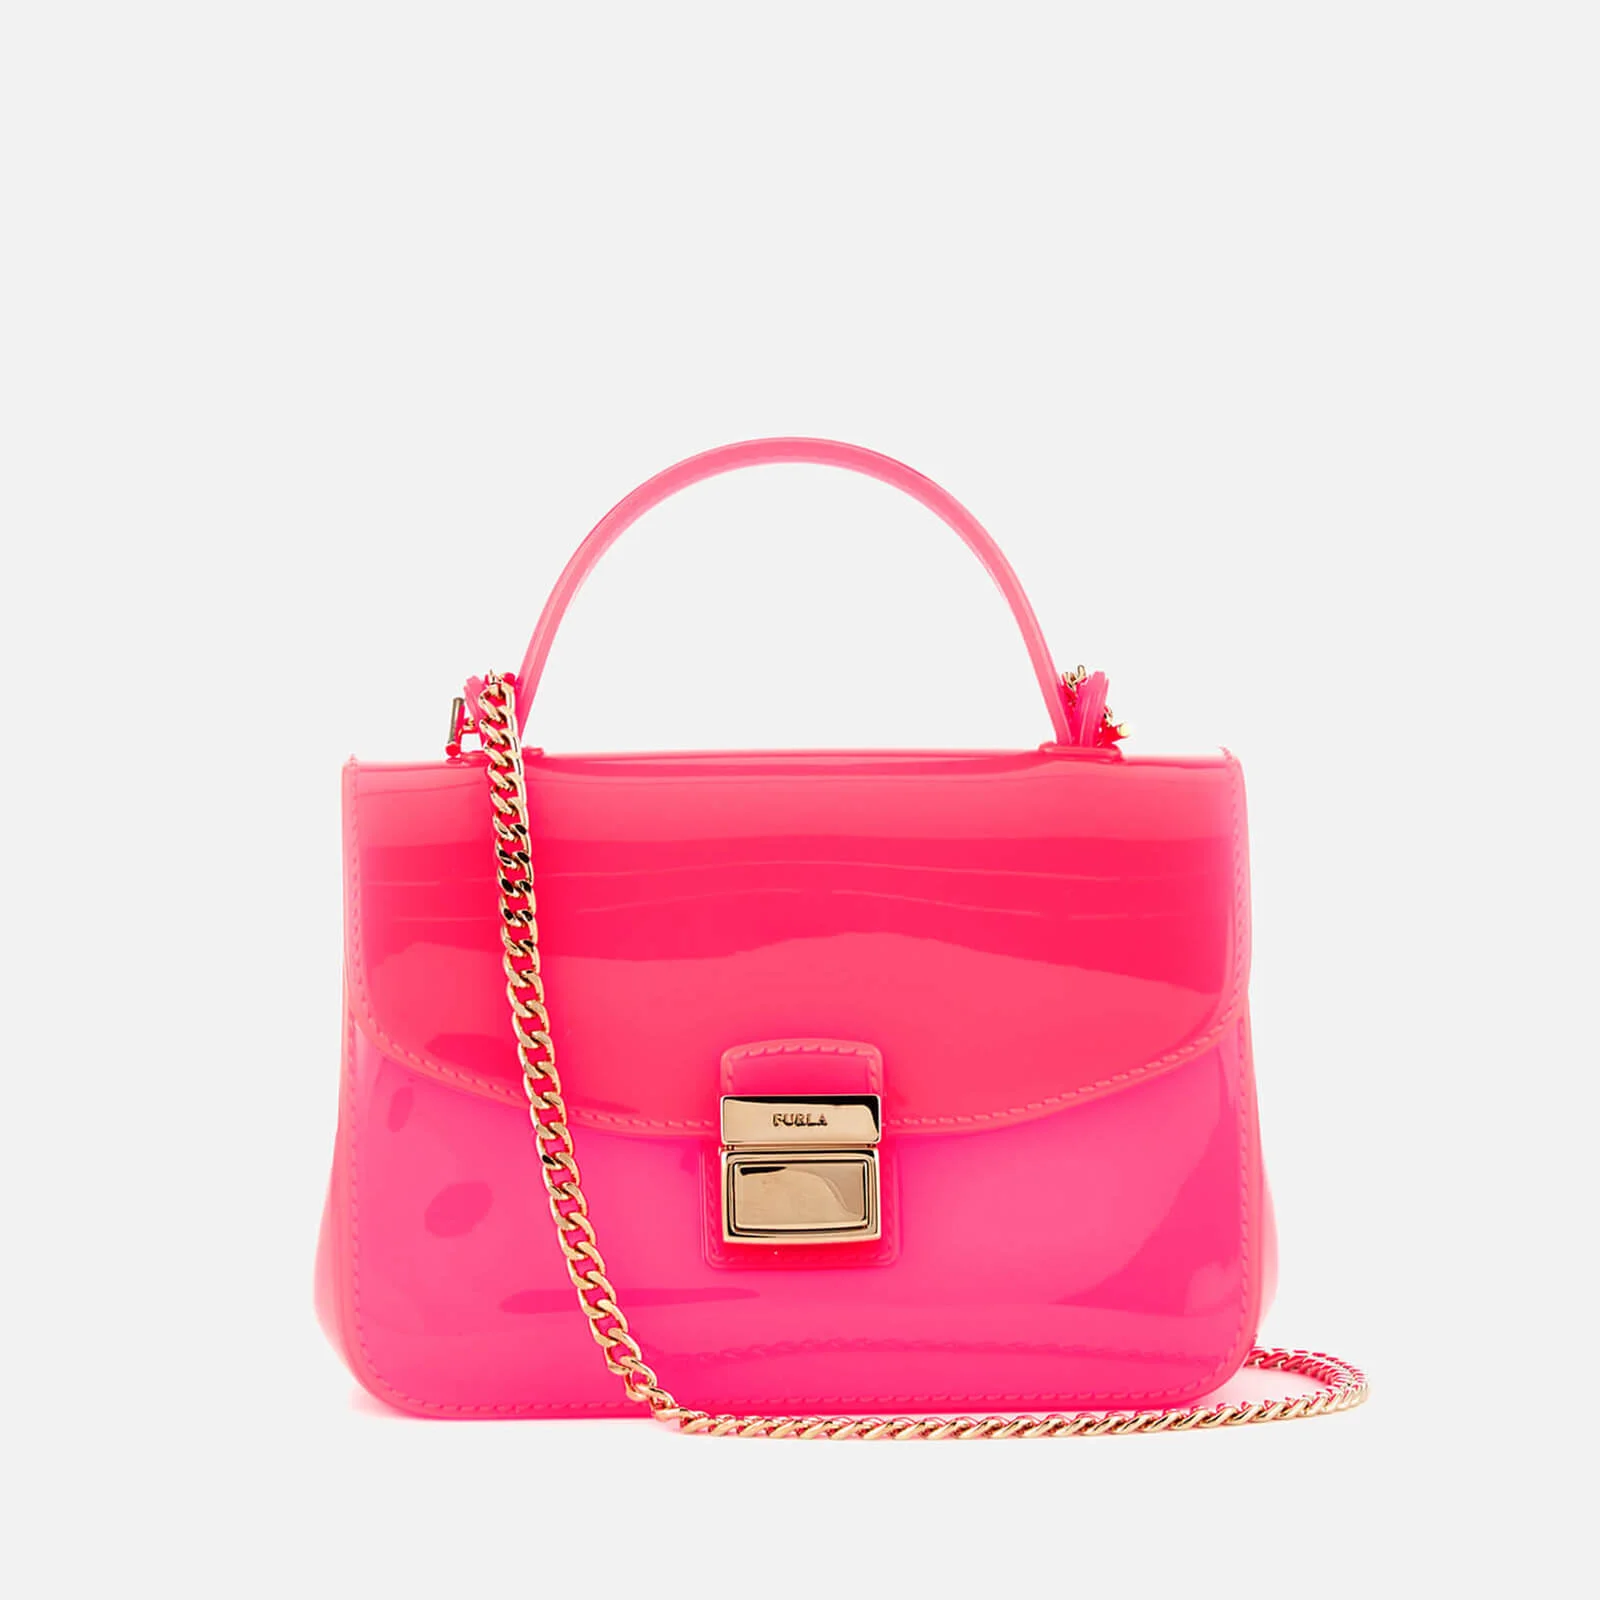 Furla Women's Candy Sugar Mini Cross Body Bag - Pink Image 1